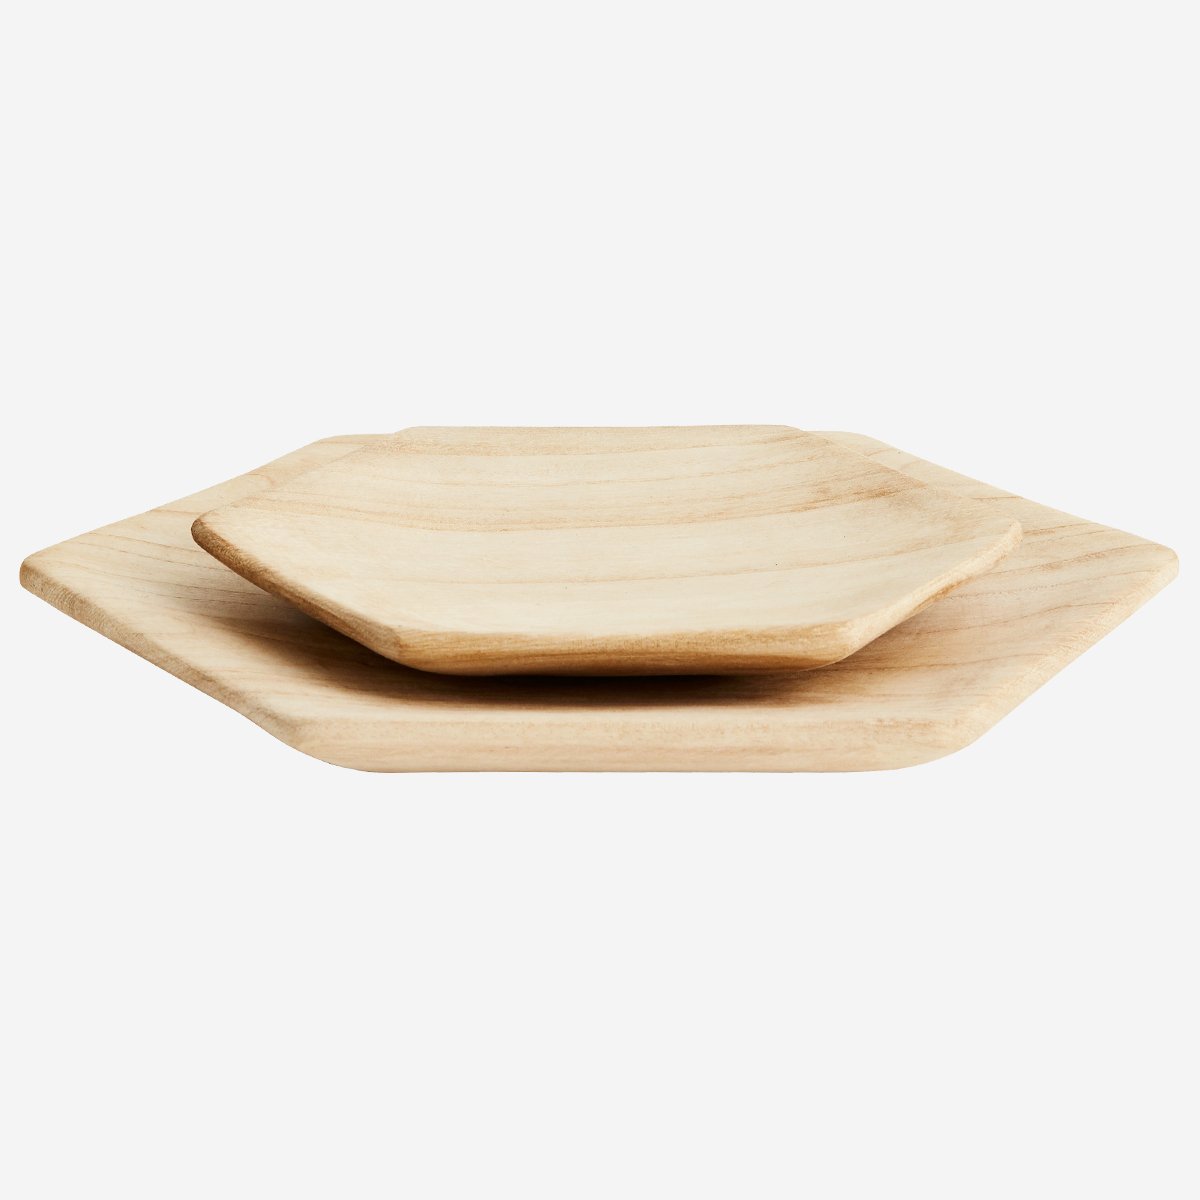 Hexagonal wooden plates - Natalia Willmott